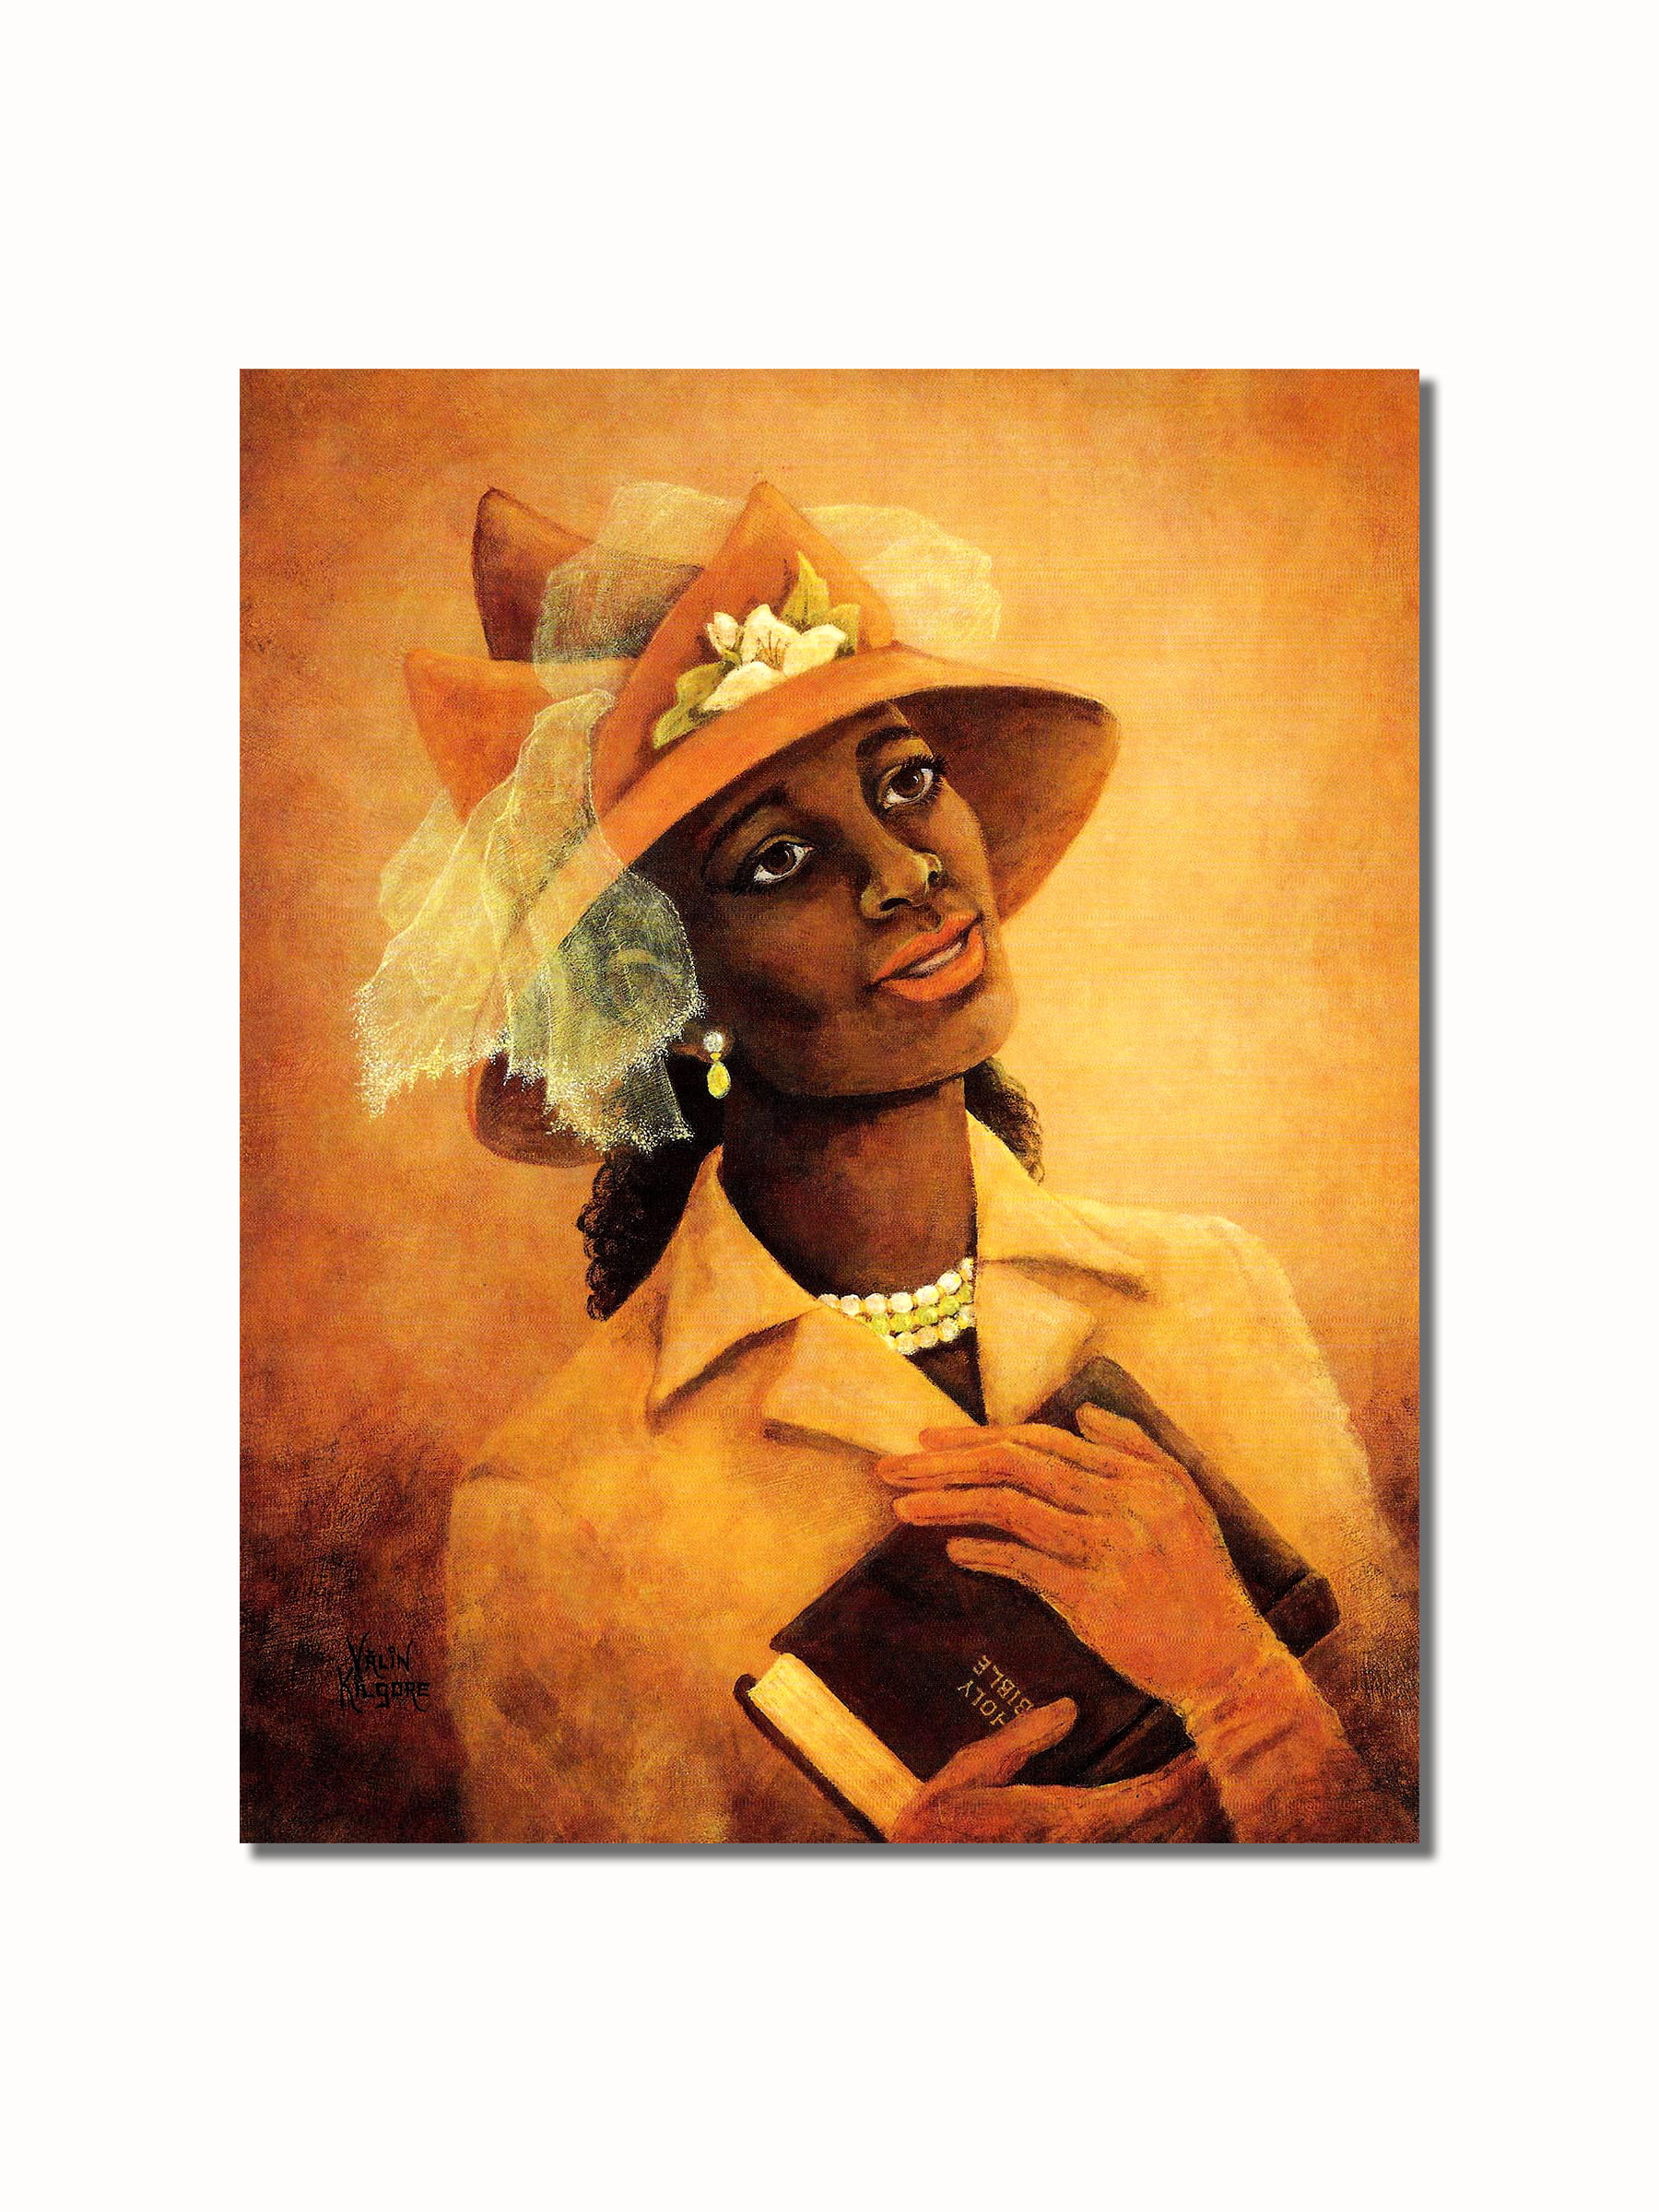 Black Woman Flower Hat Church Praying Bible #1 Wall Picture 8x10 Art Print 